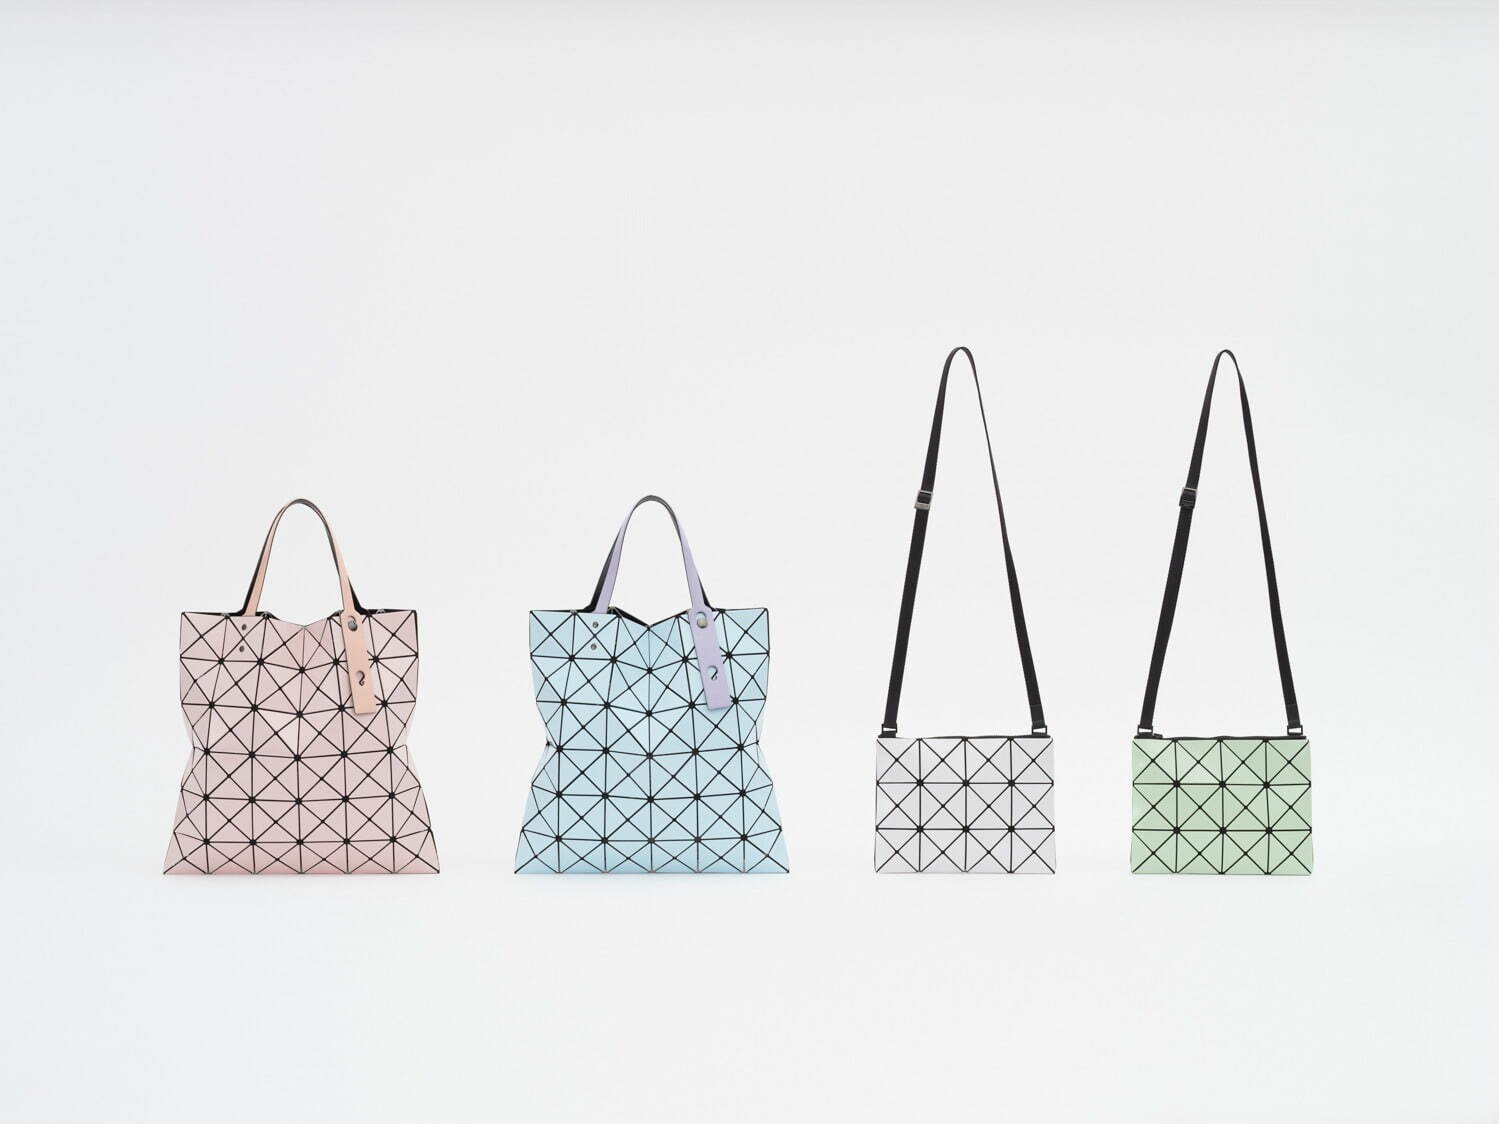 「LUCENT GLOSS MIX」
Tote bag(H340×W340) 各44,000円
Shoulder bag(H170×W230) 各30,800円